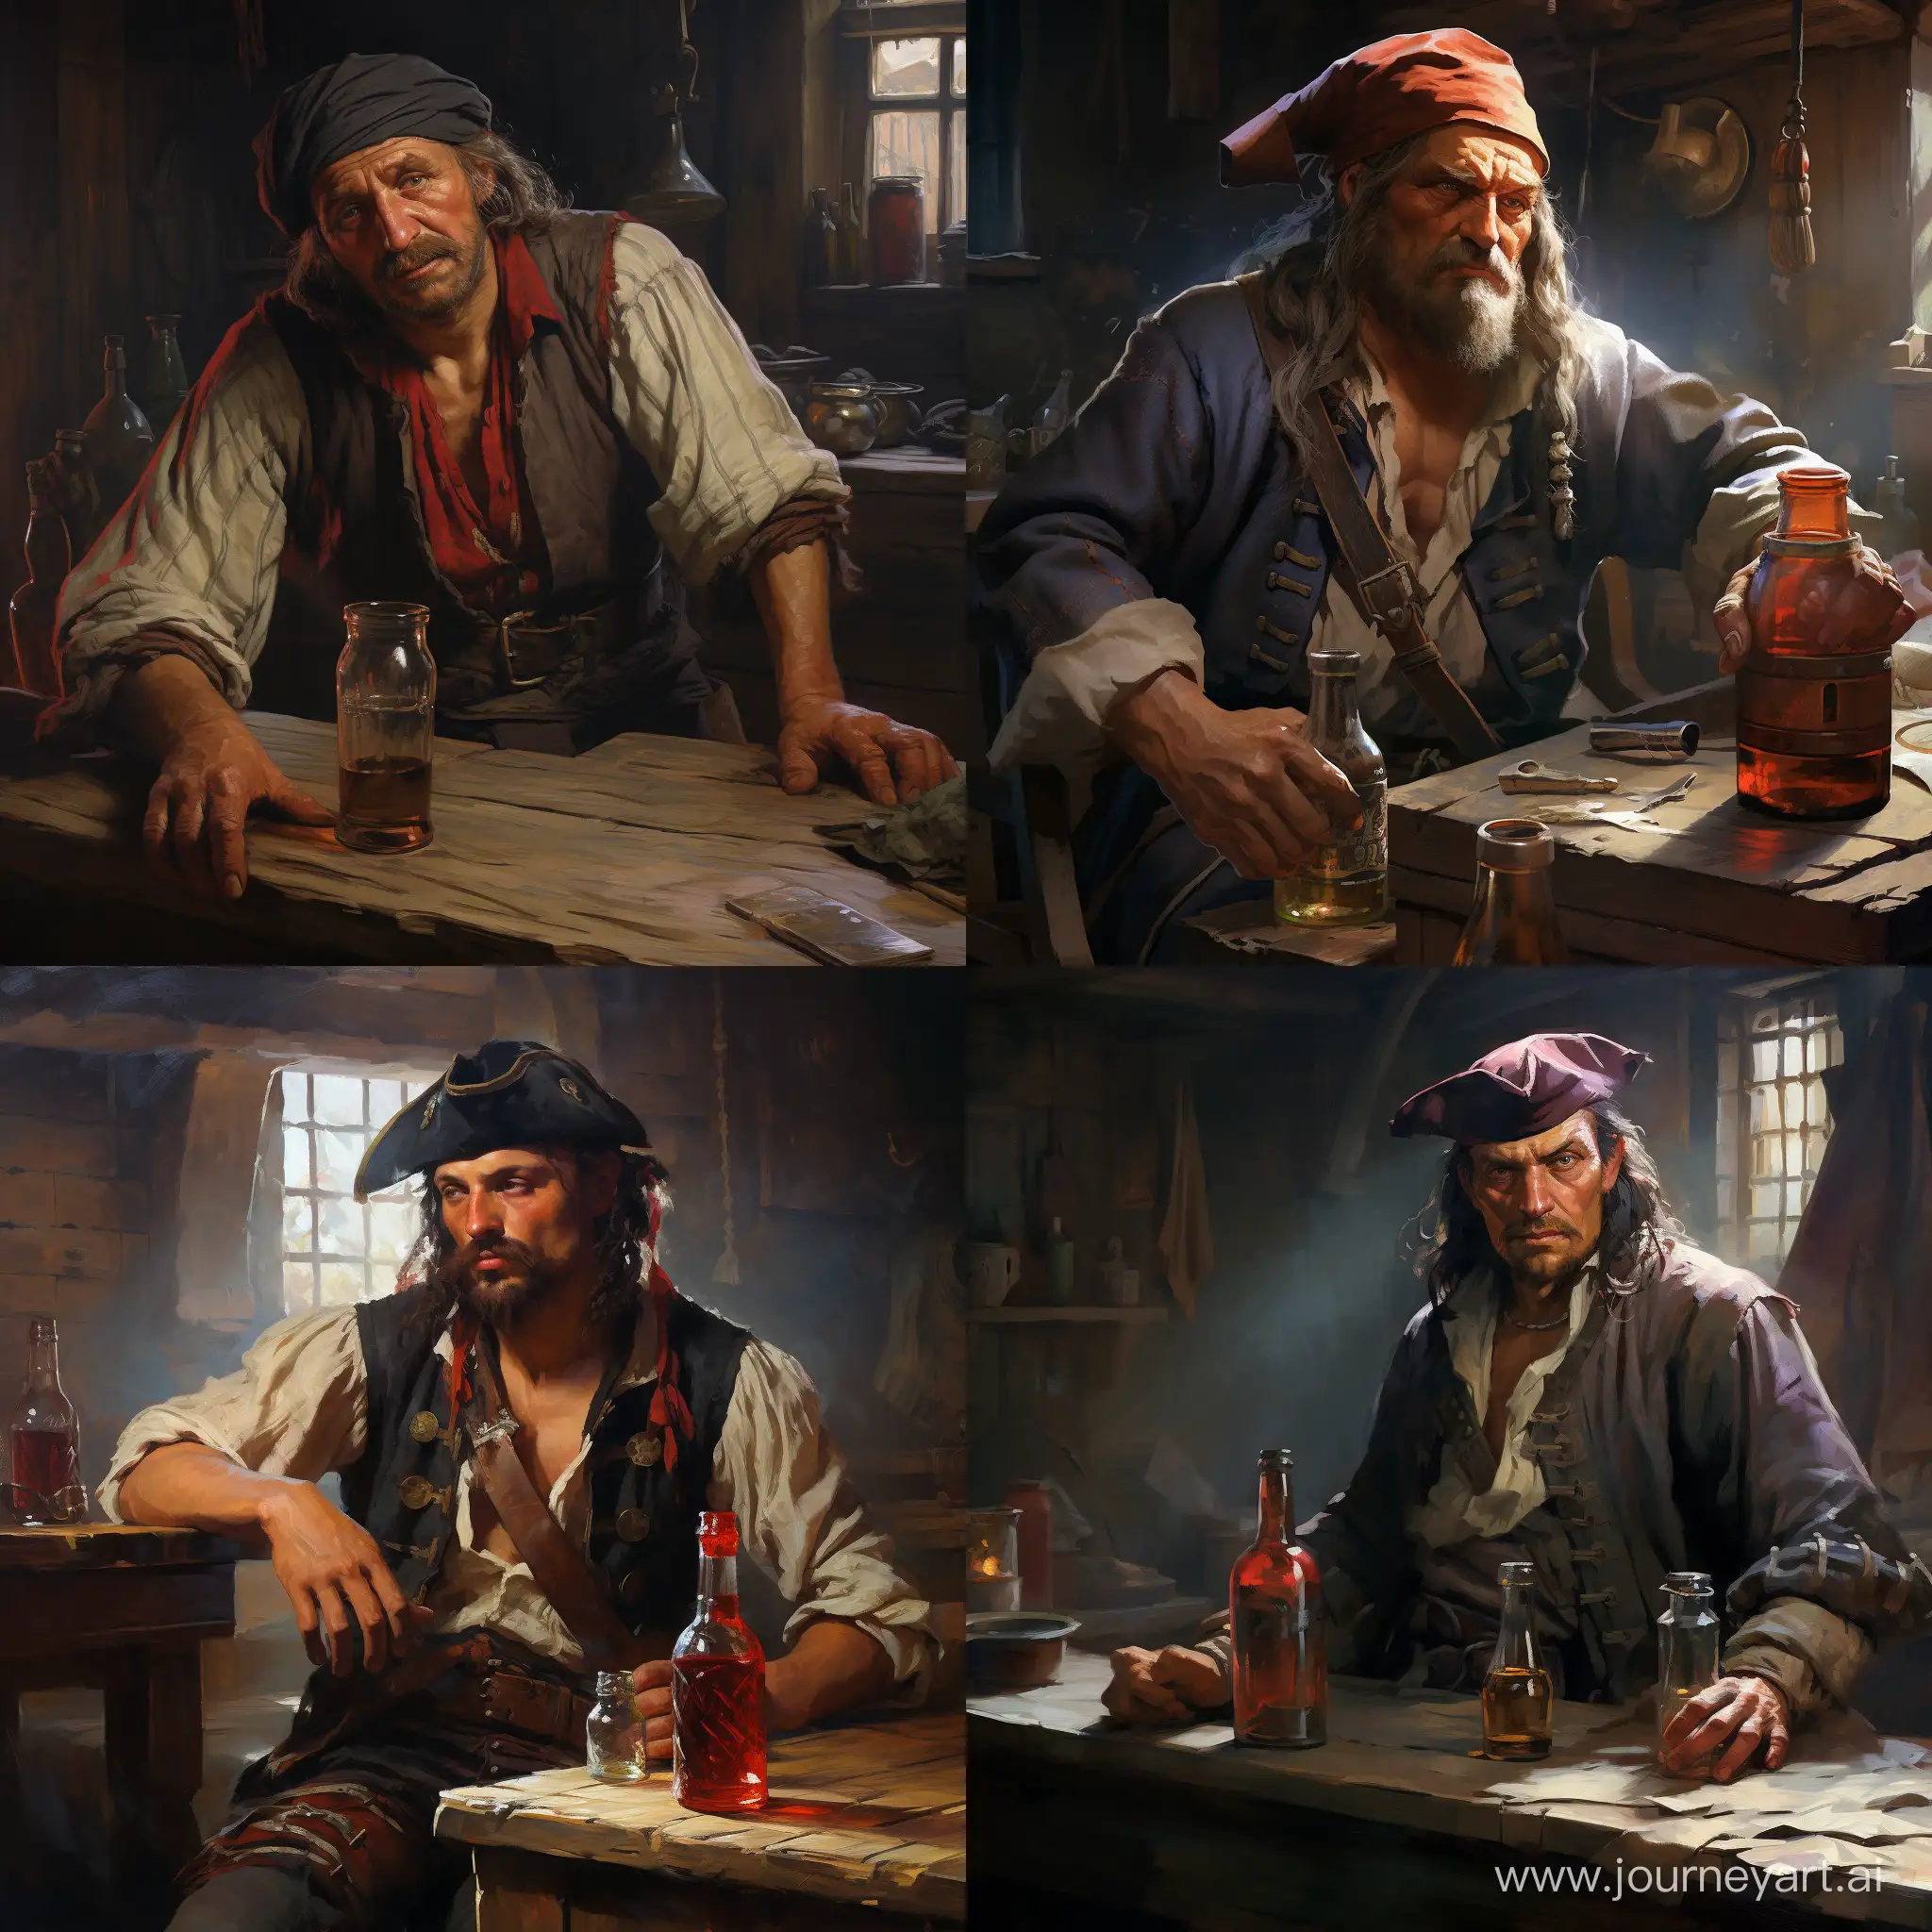 Pirate-Enjoying-Rum-in-a-Cozy-Tavern-Setting